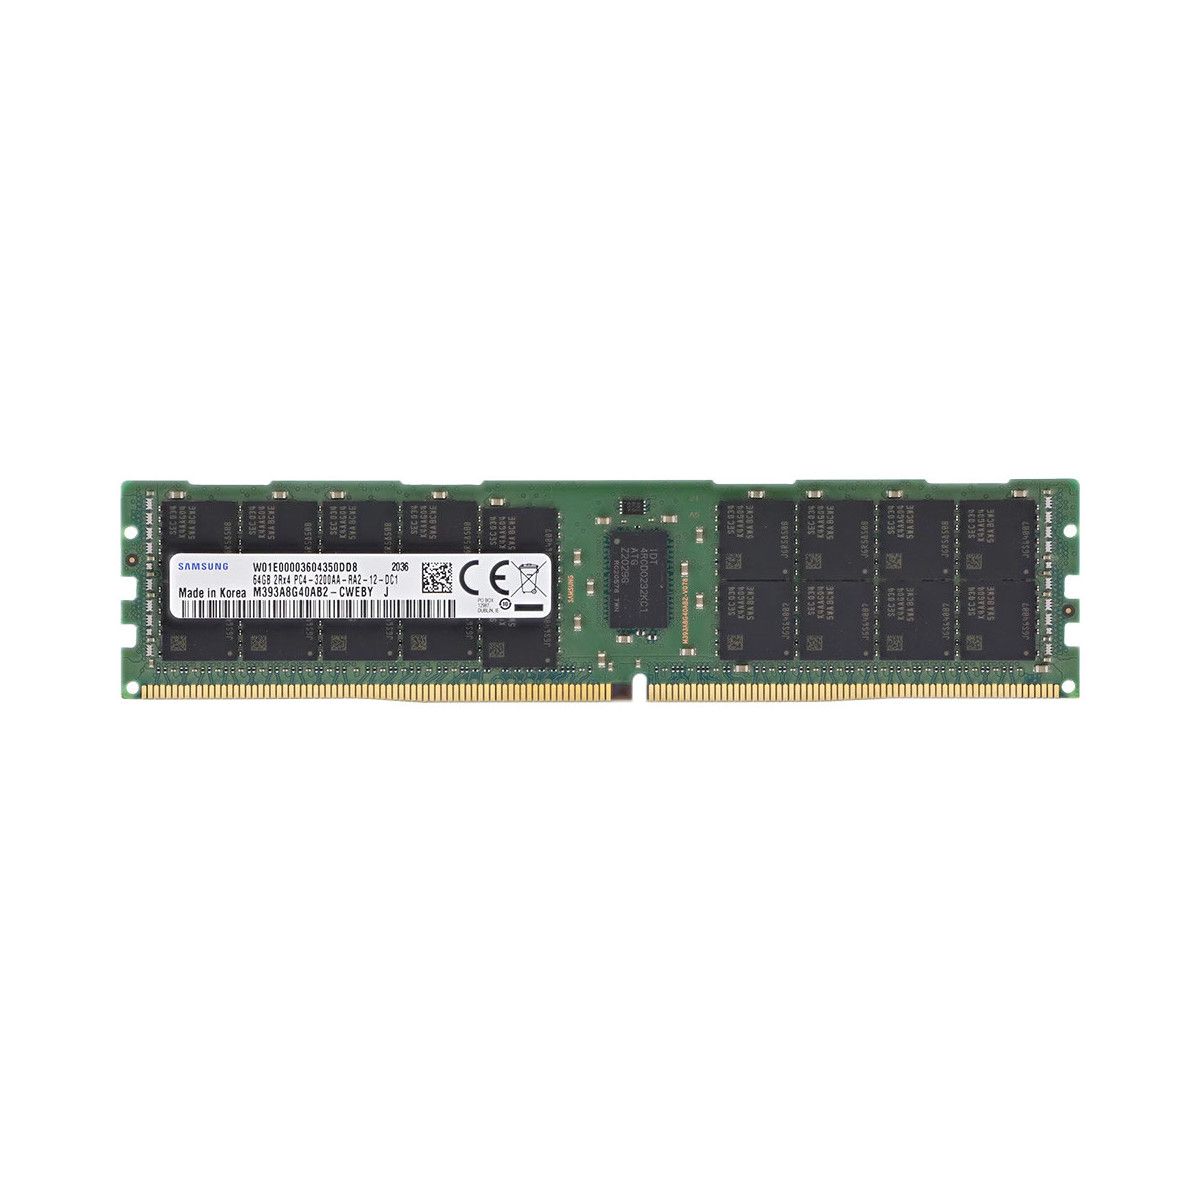 UCSX‐MR‐X64G2RW-MS - Memstar 1x 64GB DDR4-3200 RDIMM PC4-25600R - OEM compatible con Mem-Star Memoria 1 - Memstar 